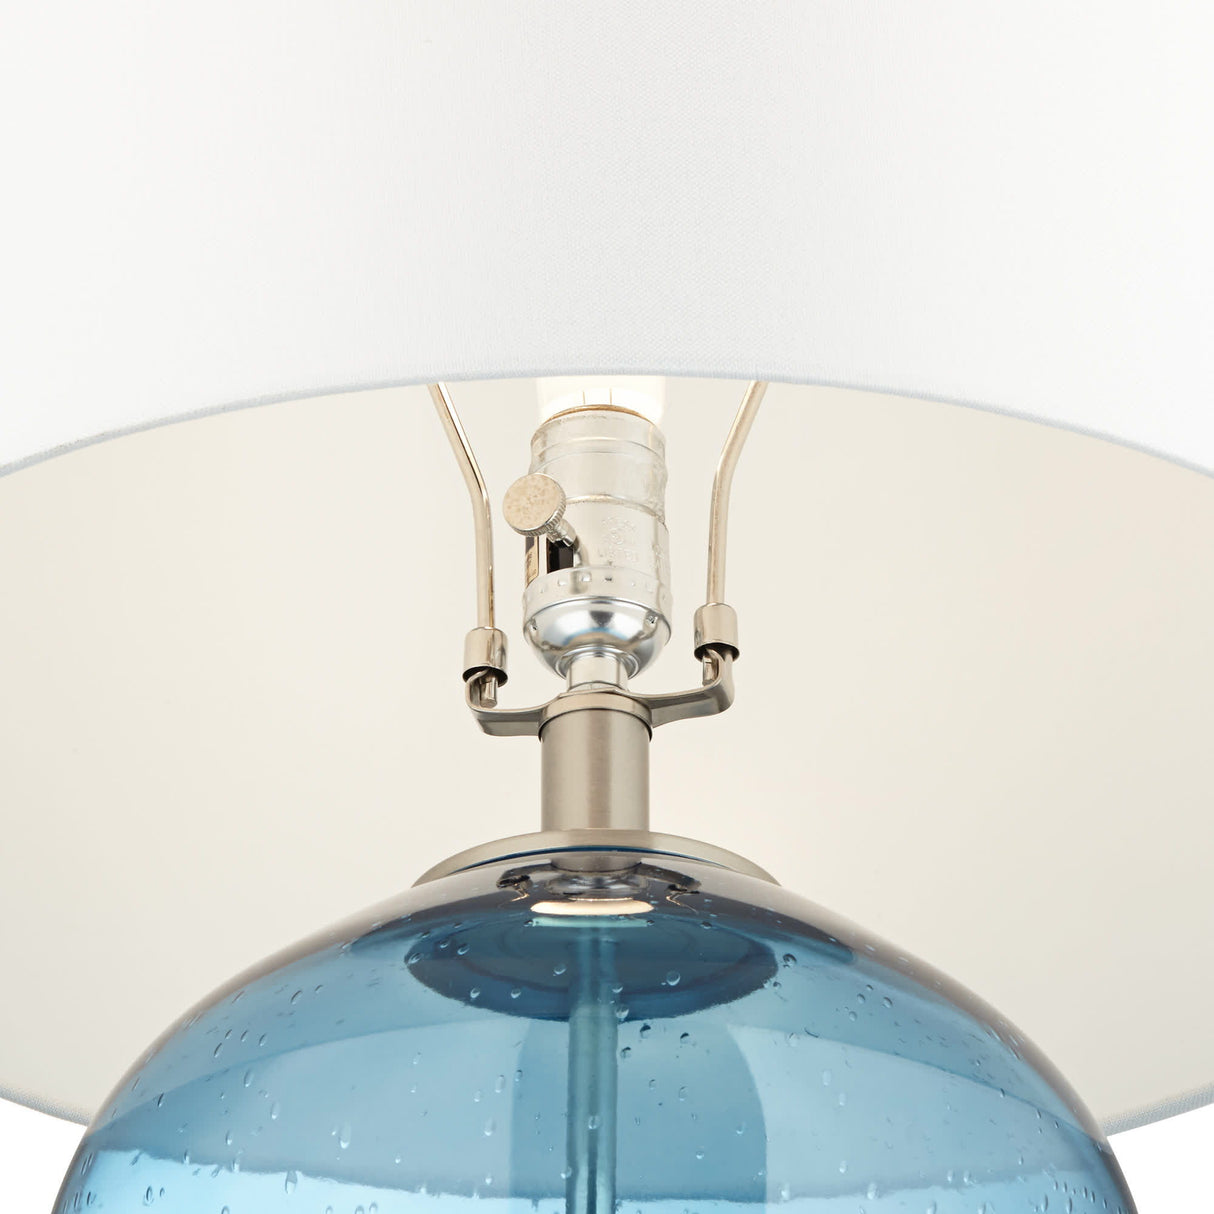 Pavo - Table Lamp - Blue Sea